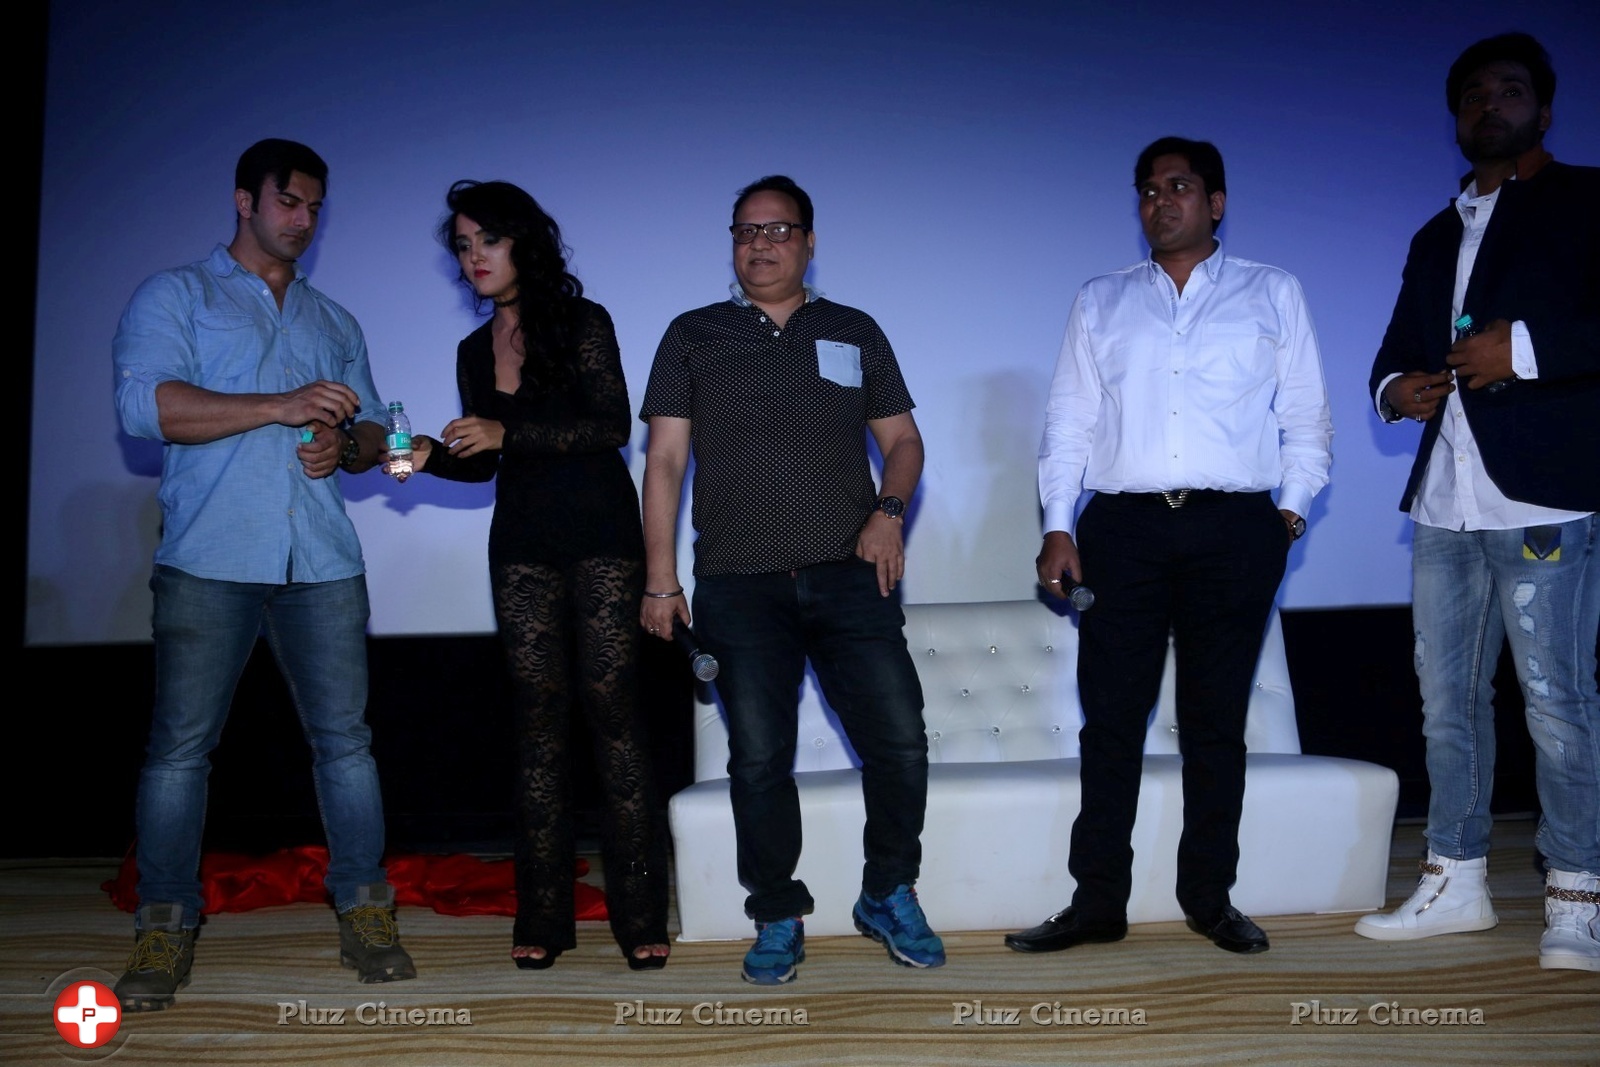 Song Launch Of Film Ishq Junoon With Rajbeer Singh, Divya Singh, Akshay Rangshahi Photos | Picture 1433437